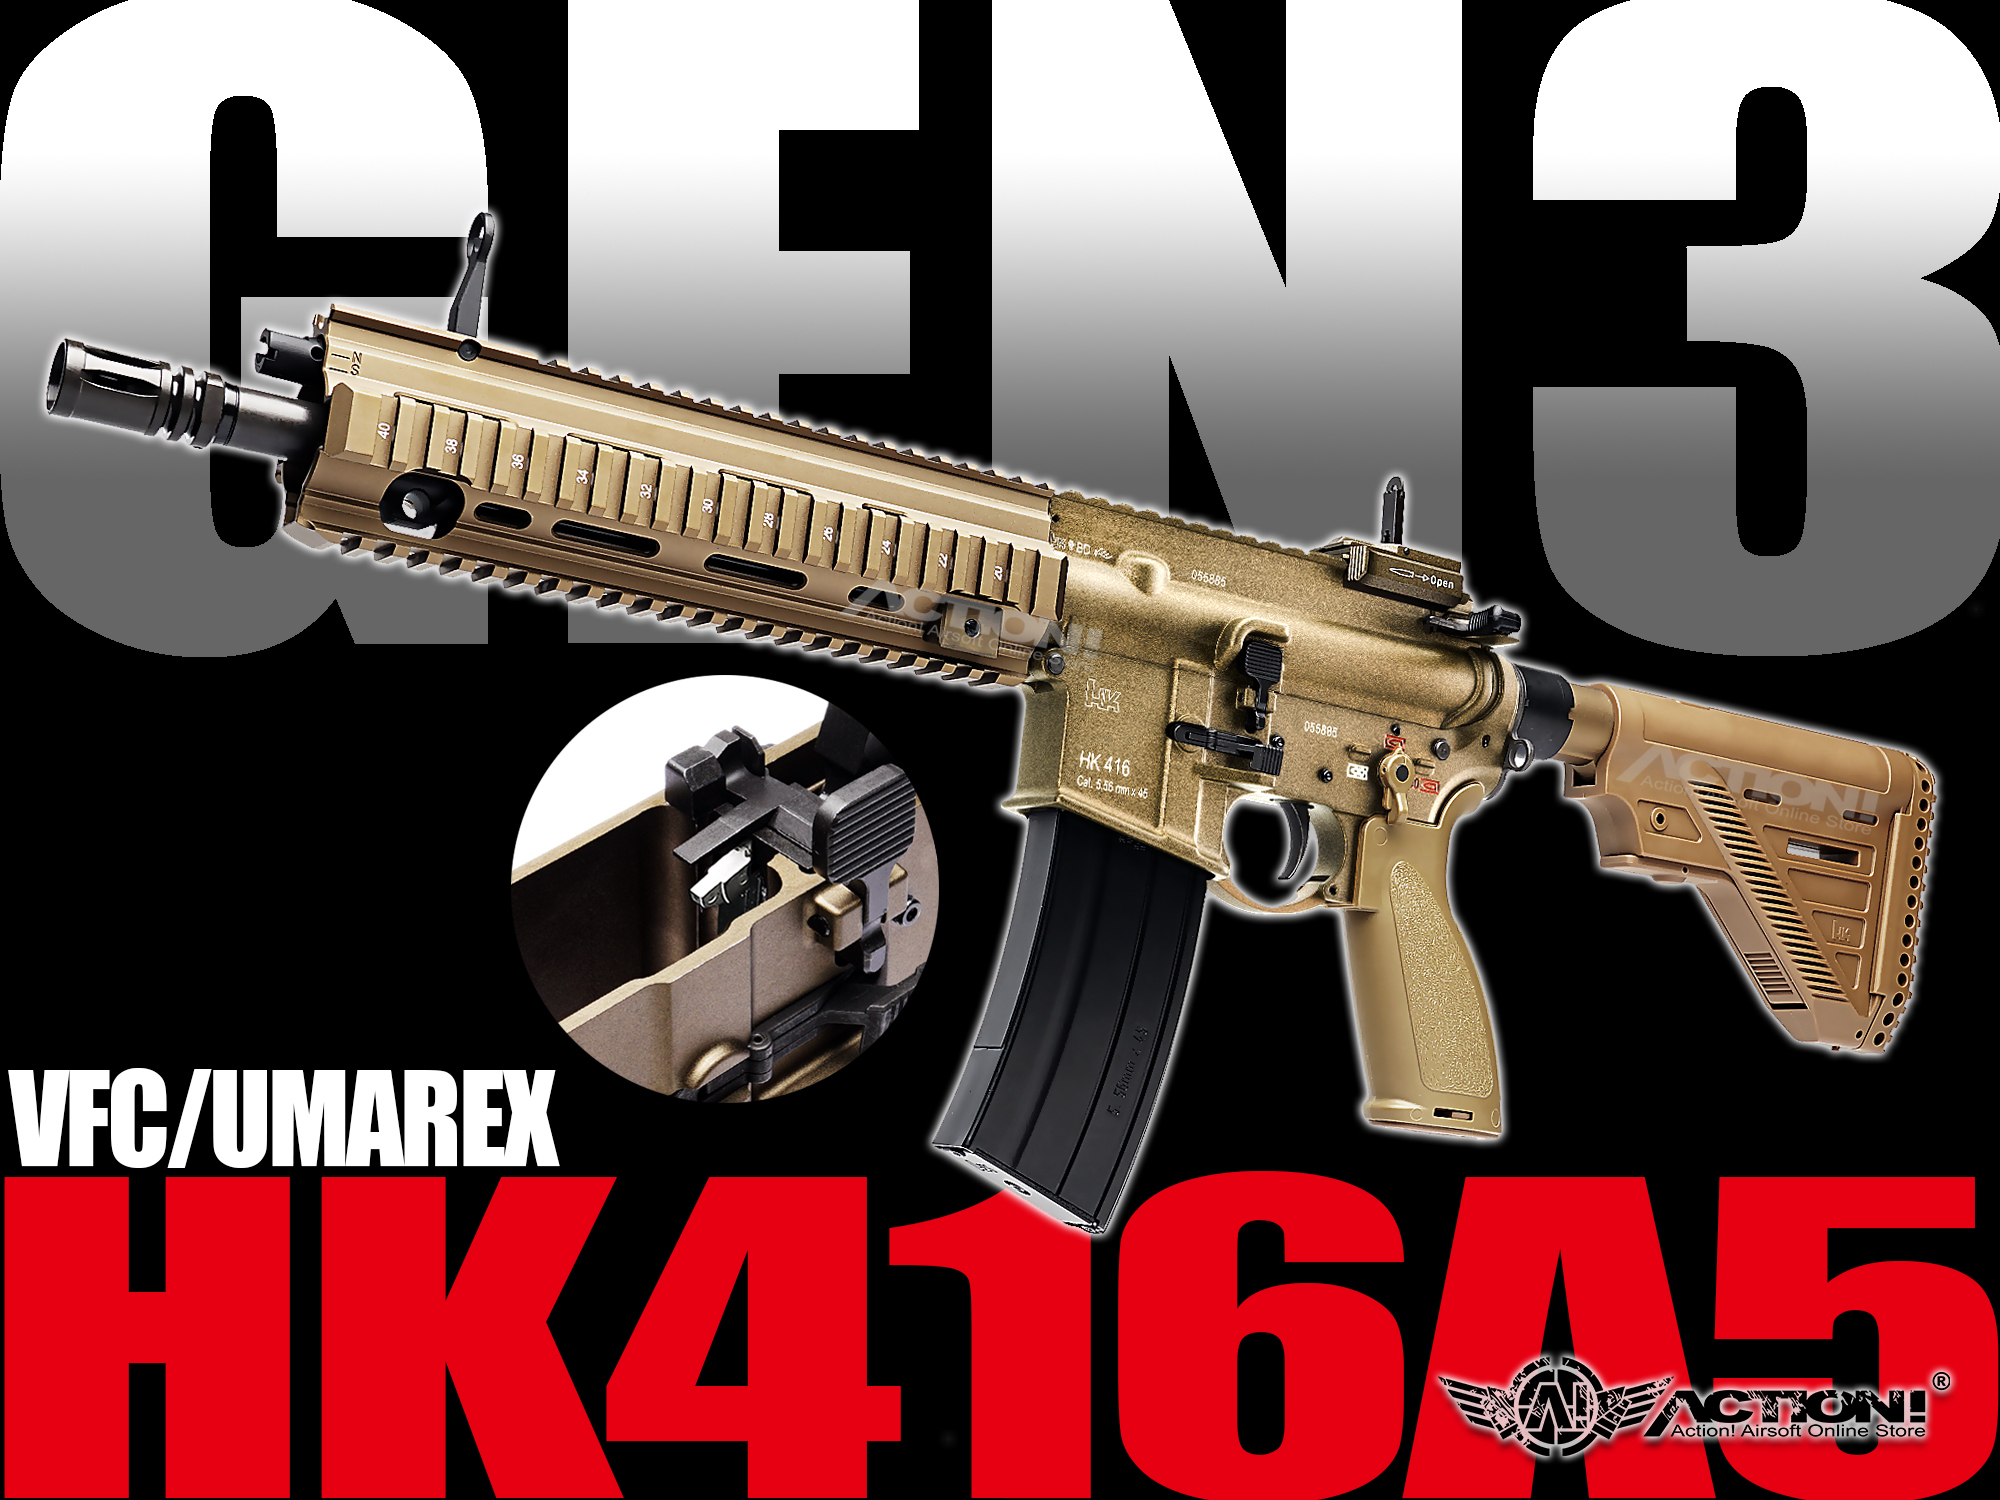 VFC/Umarex - HK416A5 Gen3 /V3 GBB (FDE)